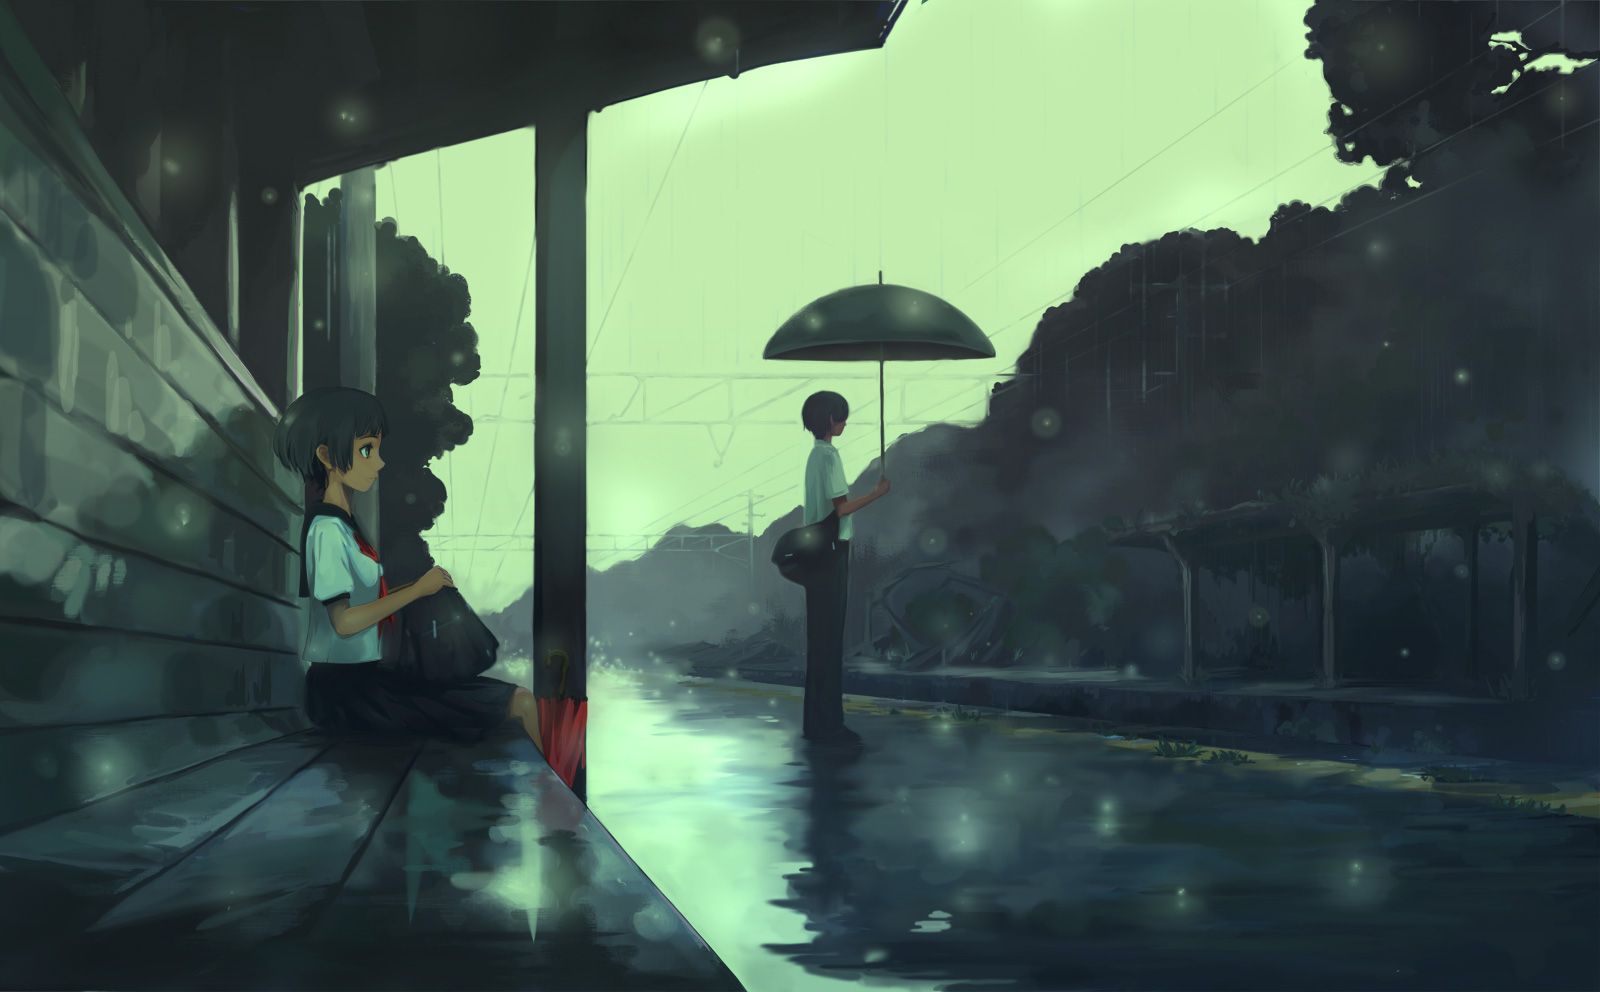 Best 40+ Mist Rain Anime Wallpapers on HipWallpapers.